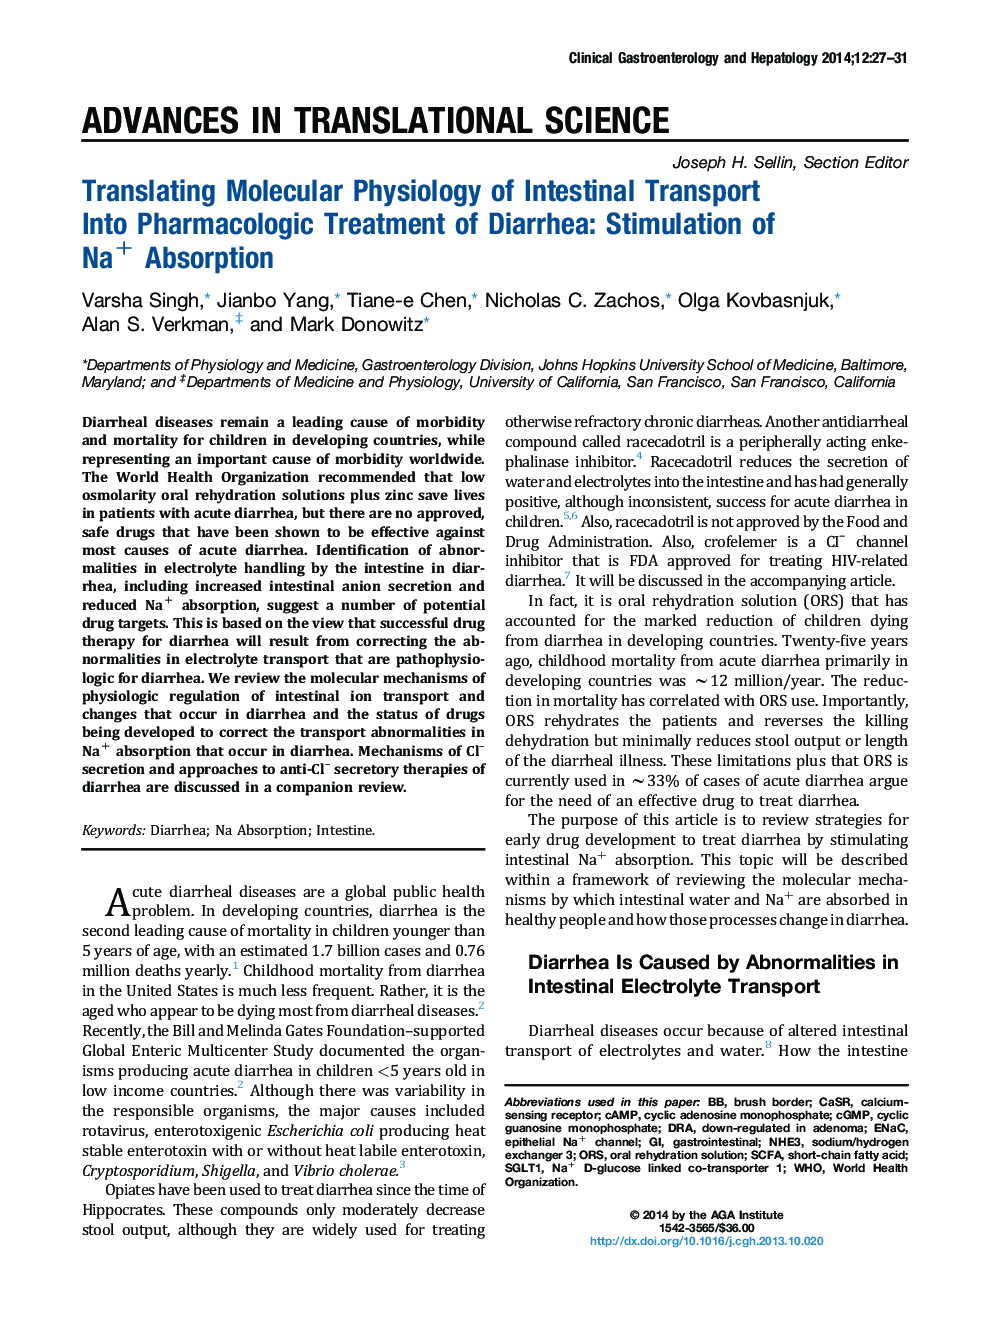 Translating Molecular Physiology of Intestinal Transport Into Pharmacologic Treatment of Diarrhea: Stimulation of Na+ Absorption